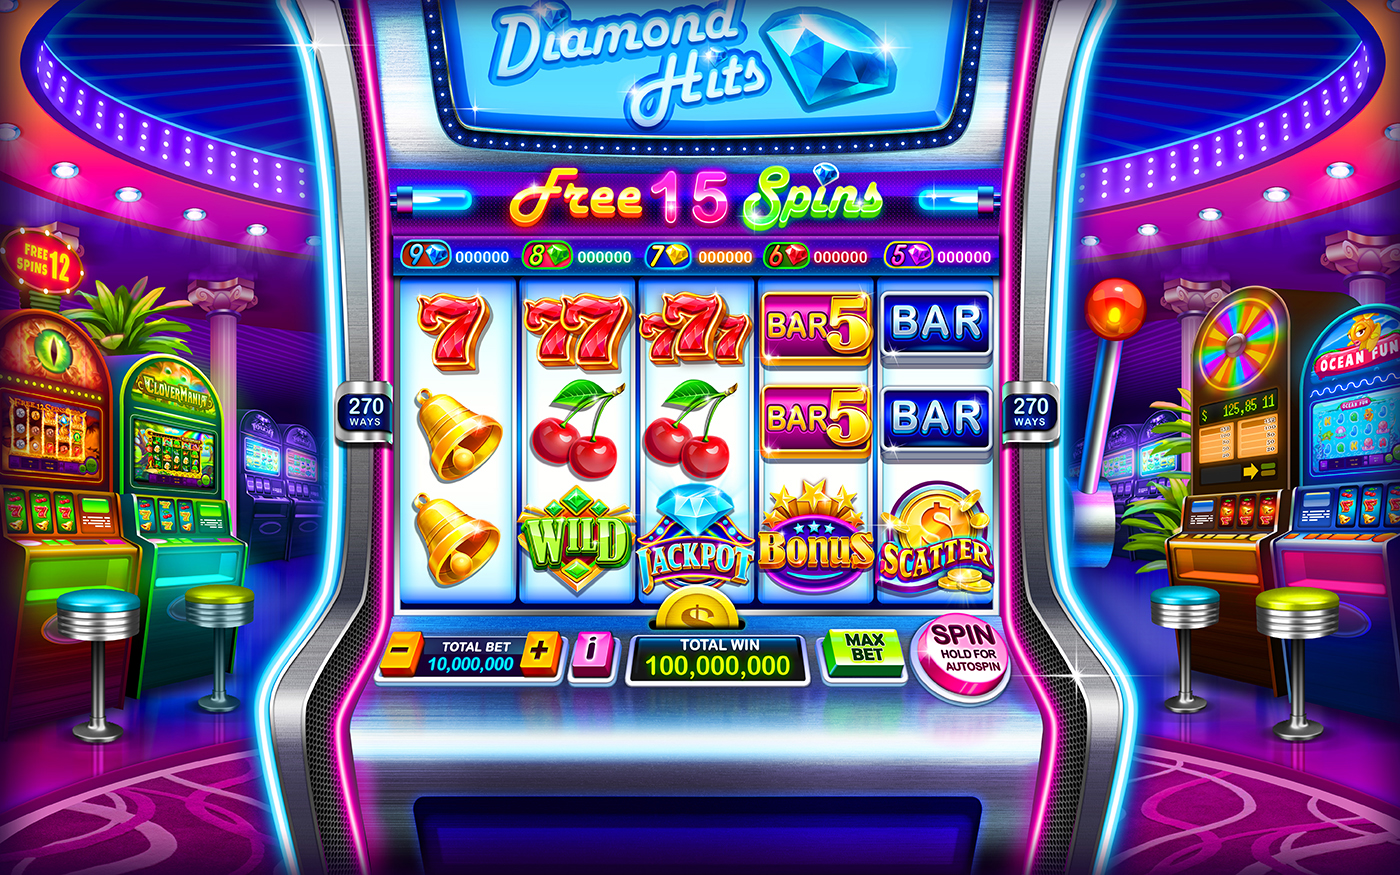 Casino slot game азино777 скачать на андроид бесплатно без интернета